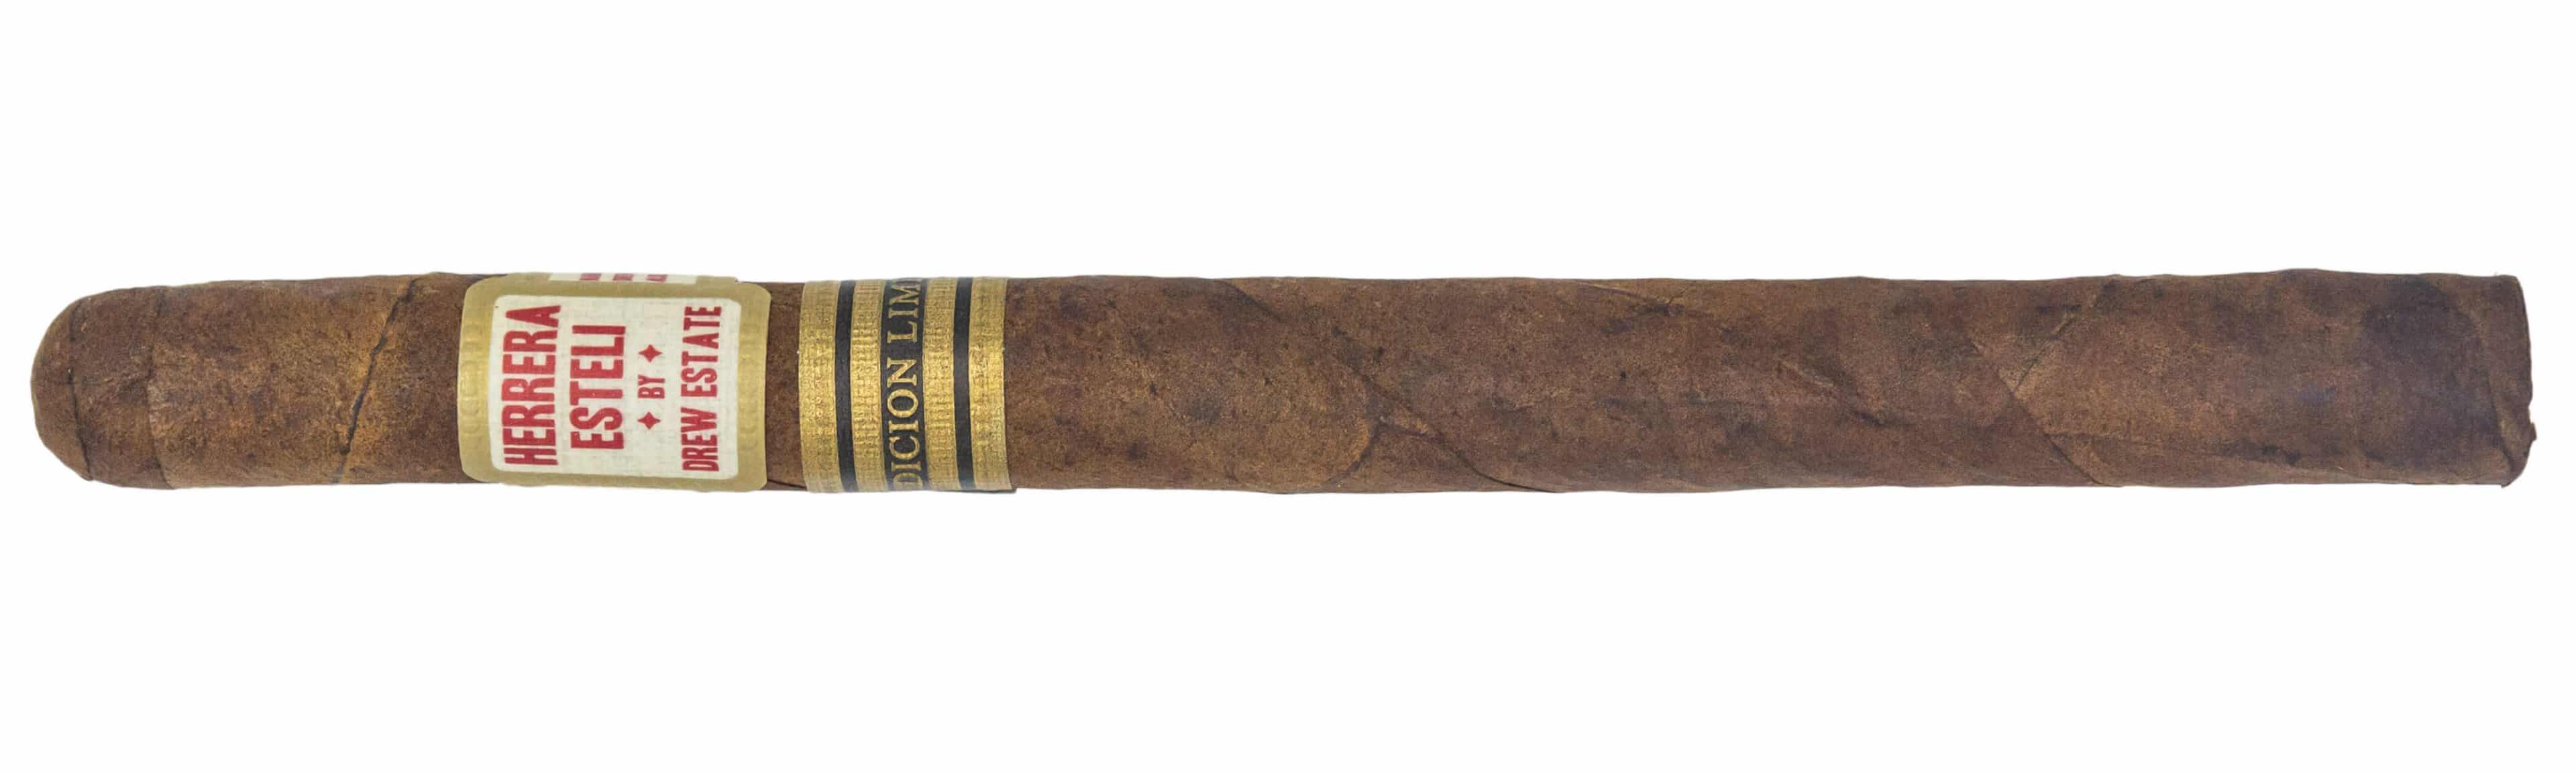 Blind Cigar Review: Drew Estate | Herrera Esteli Habano Edicion Limitada Lancero